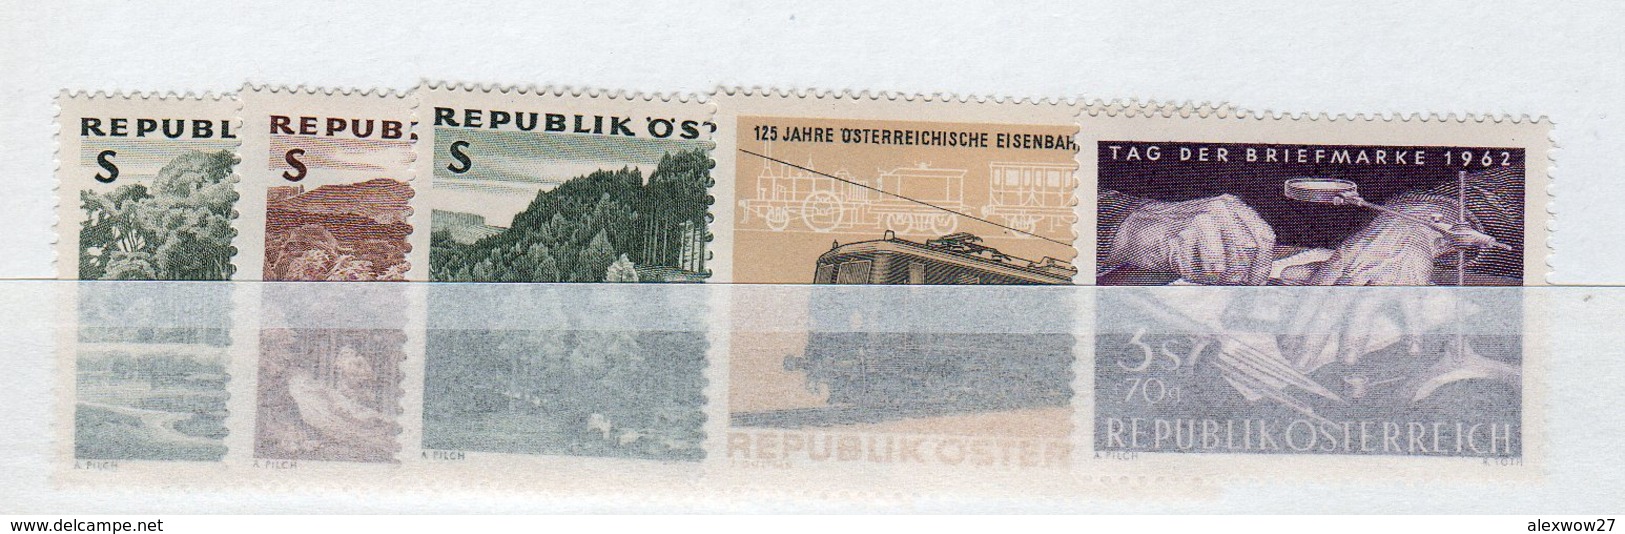 Austria 1962 Annata Completa / Years Complete **MNH /VF - Ganze Jahrgänge